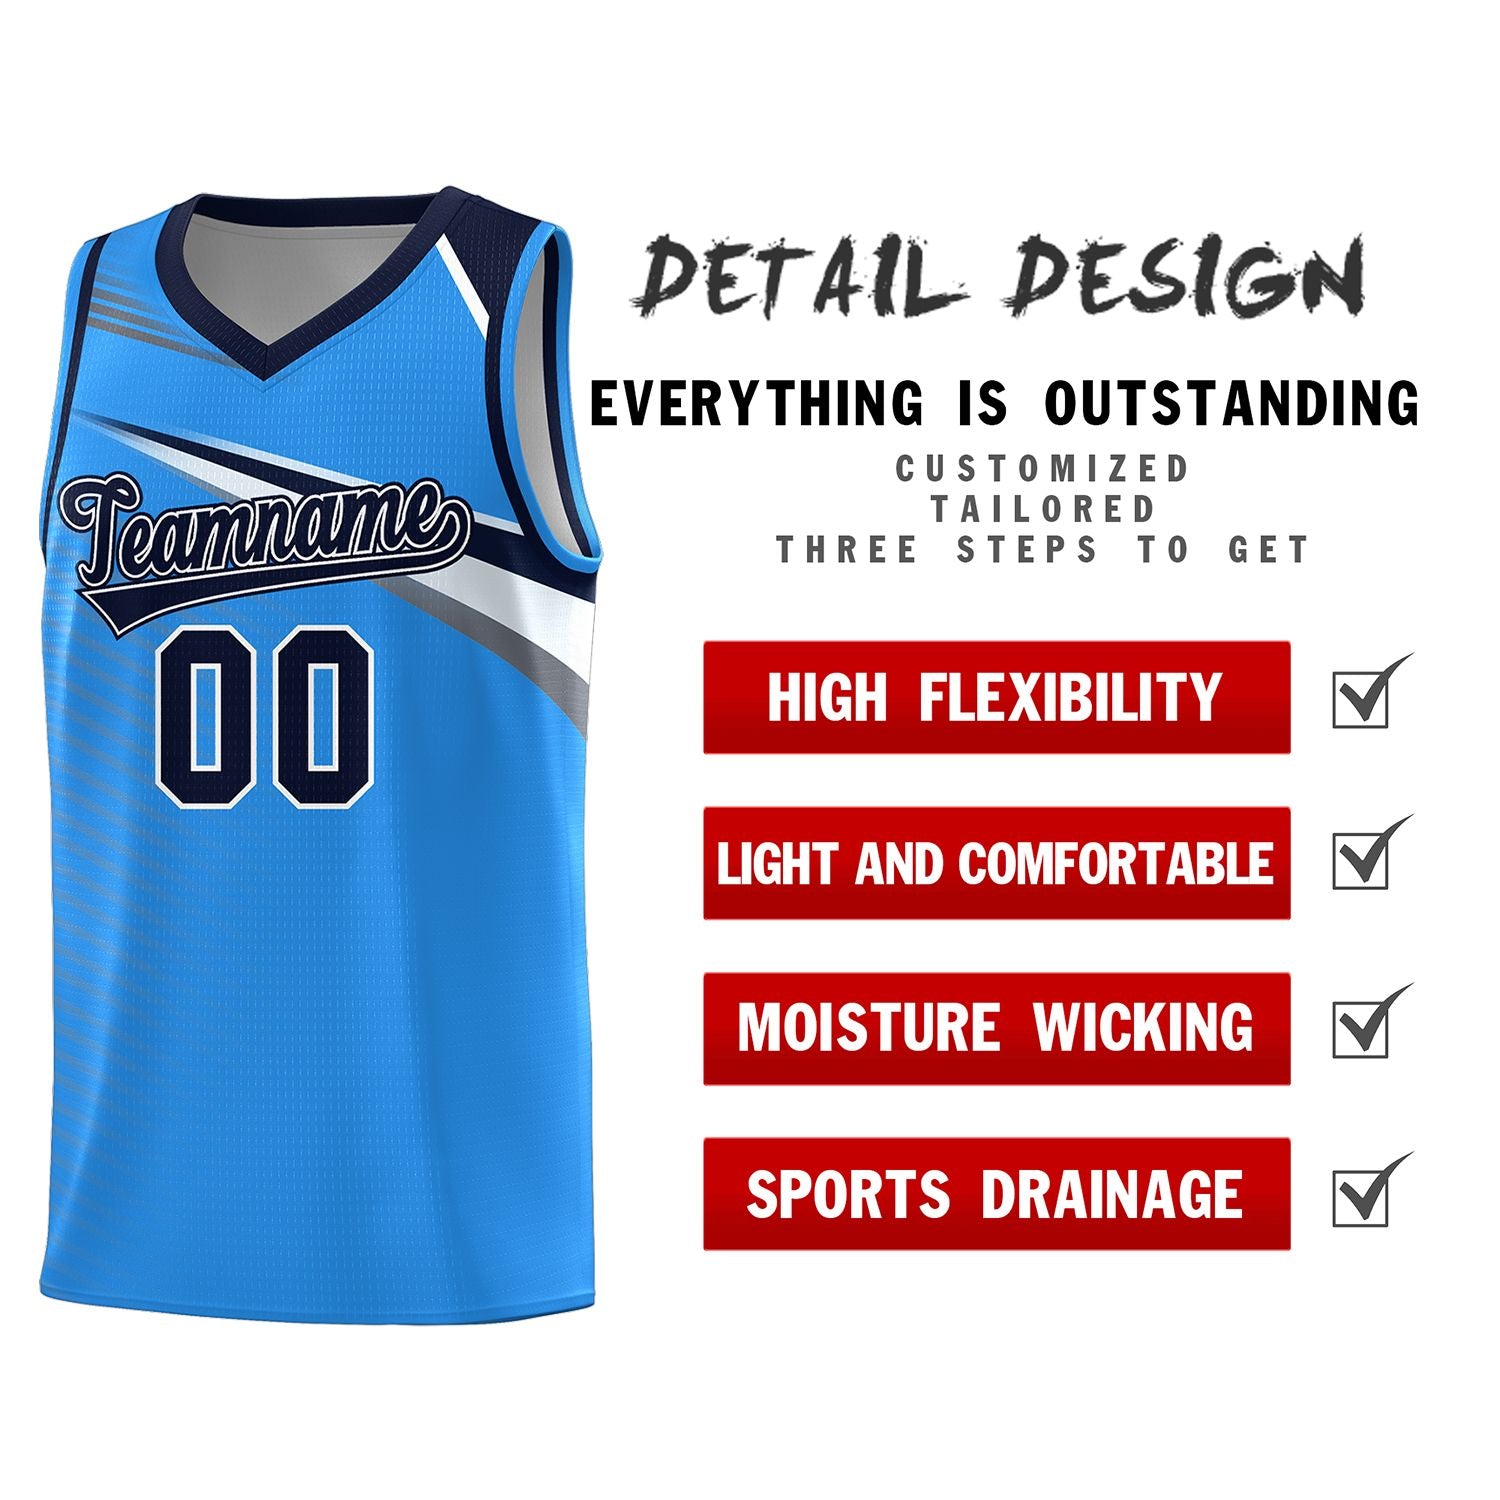 Custom Powder Blue Navy-White Chest Color Block Sports Uniform Basketball Jersey